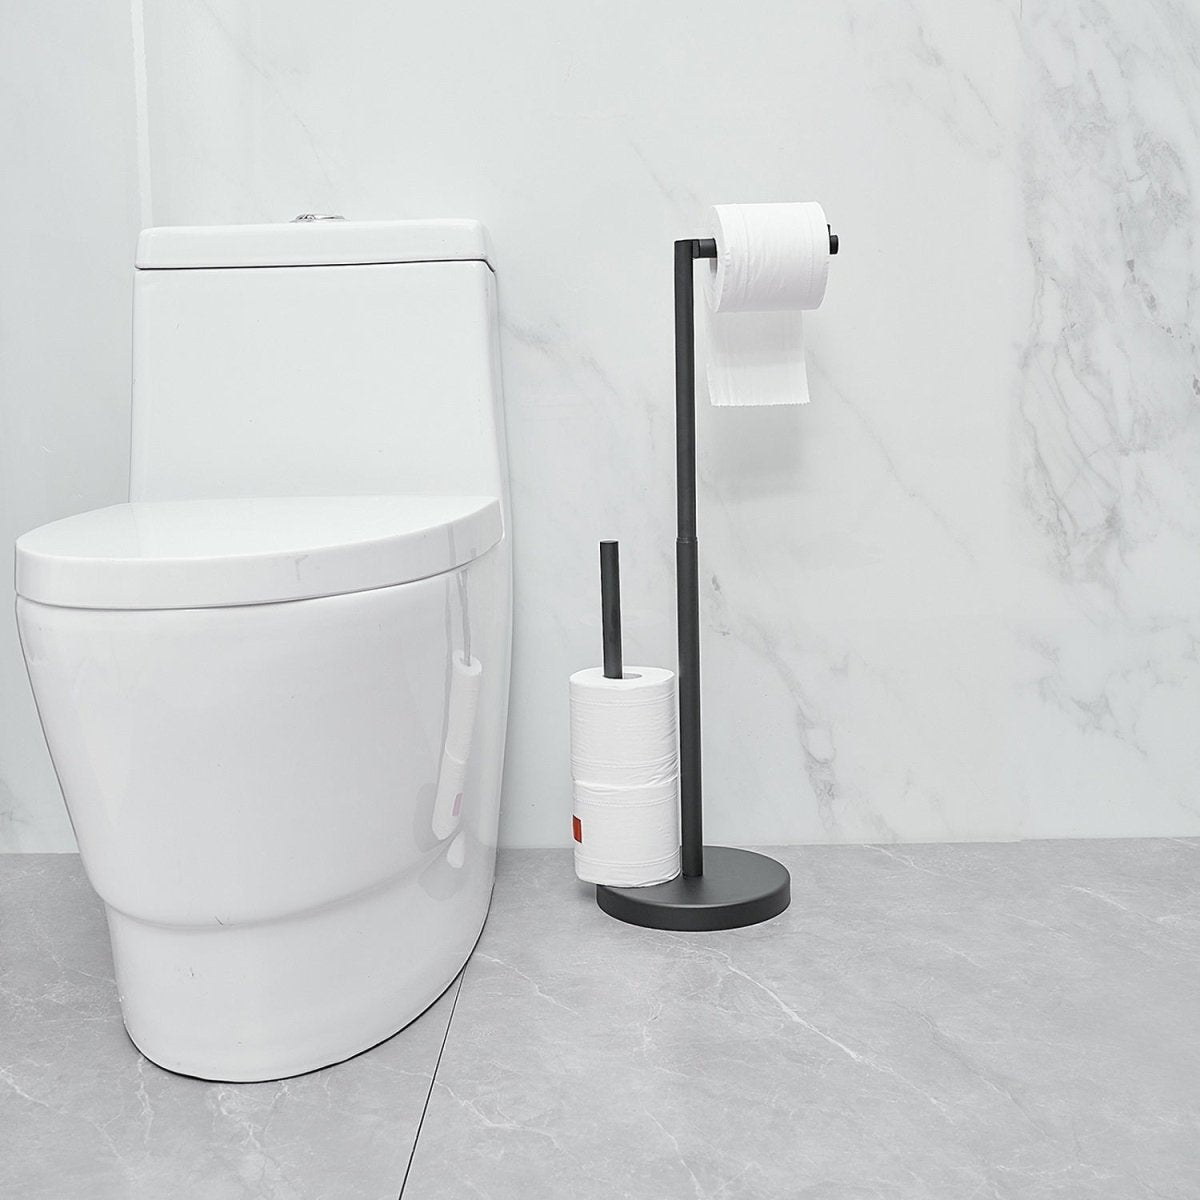 Bathroom Freestanding Toilet Paper Holder in Matte Black - buyfaucet.com